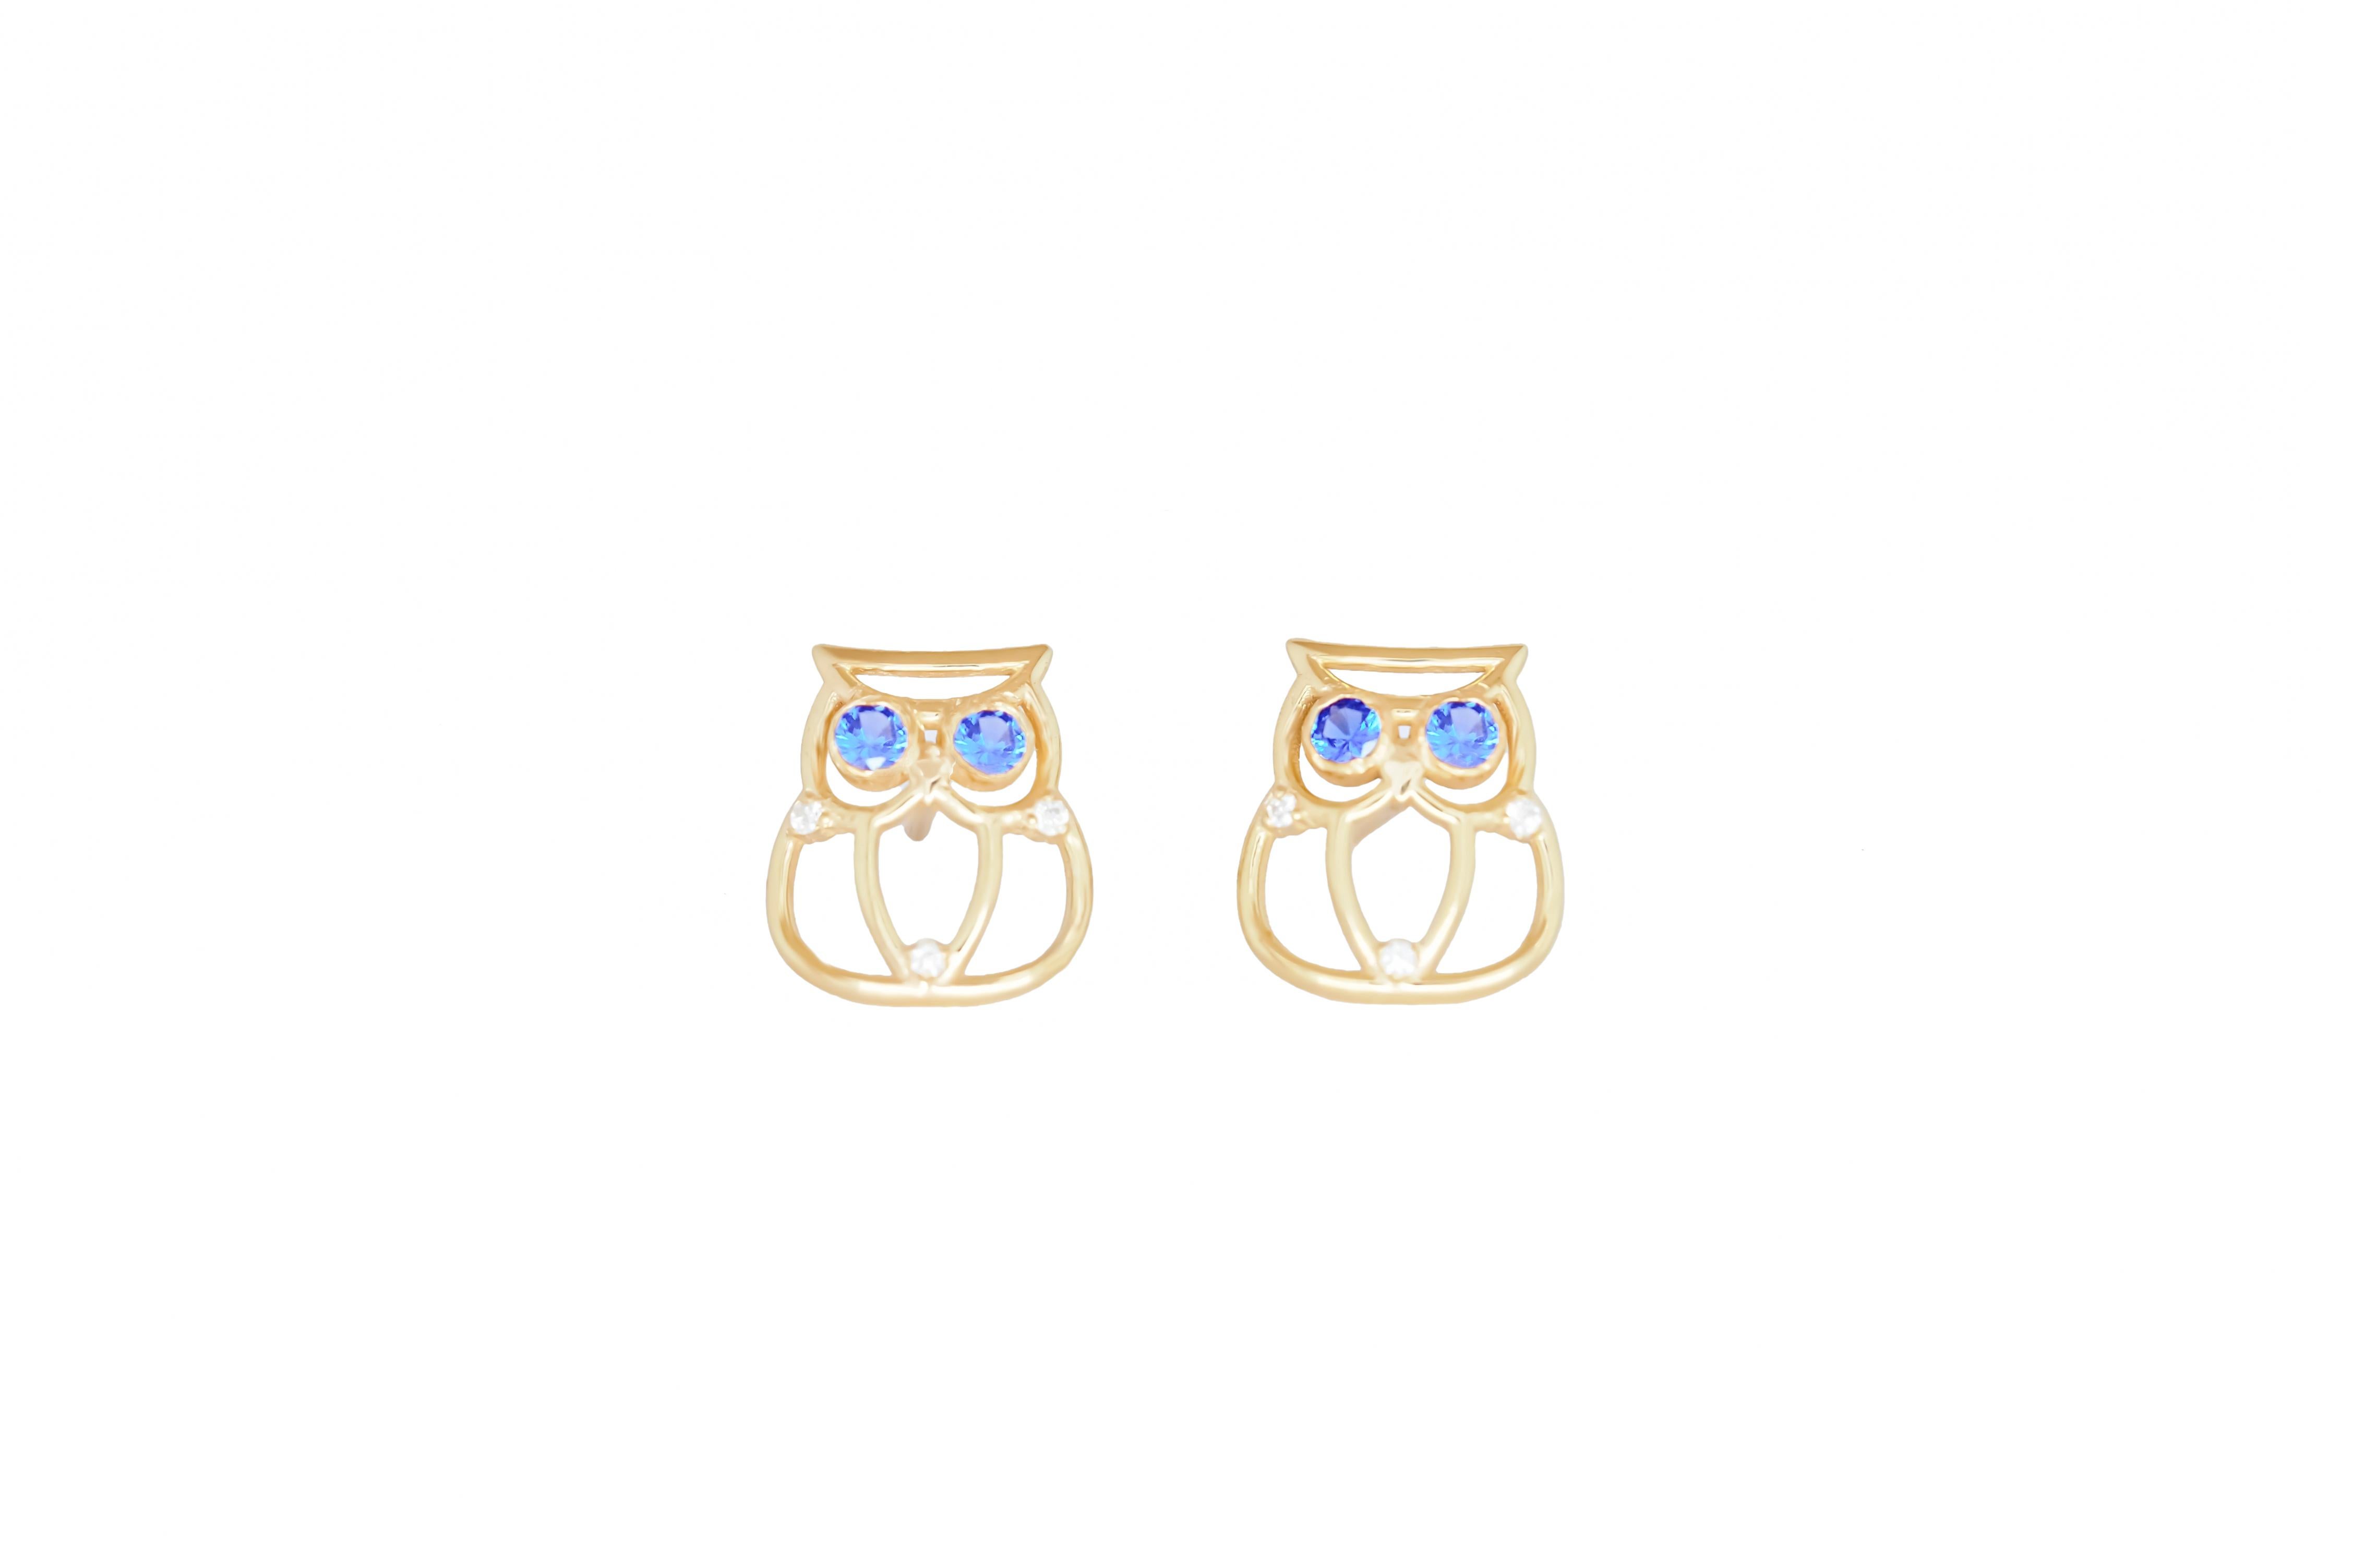 Round Cut Owl earrings in 14k gold.  For Sale